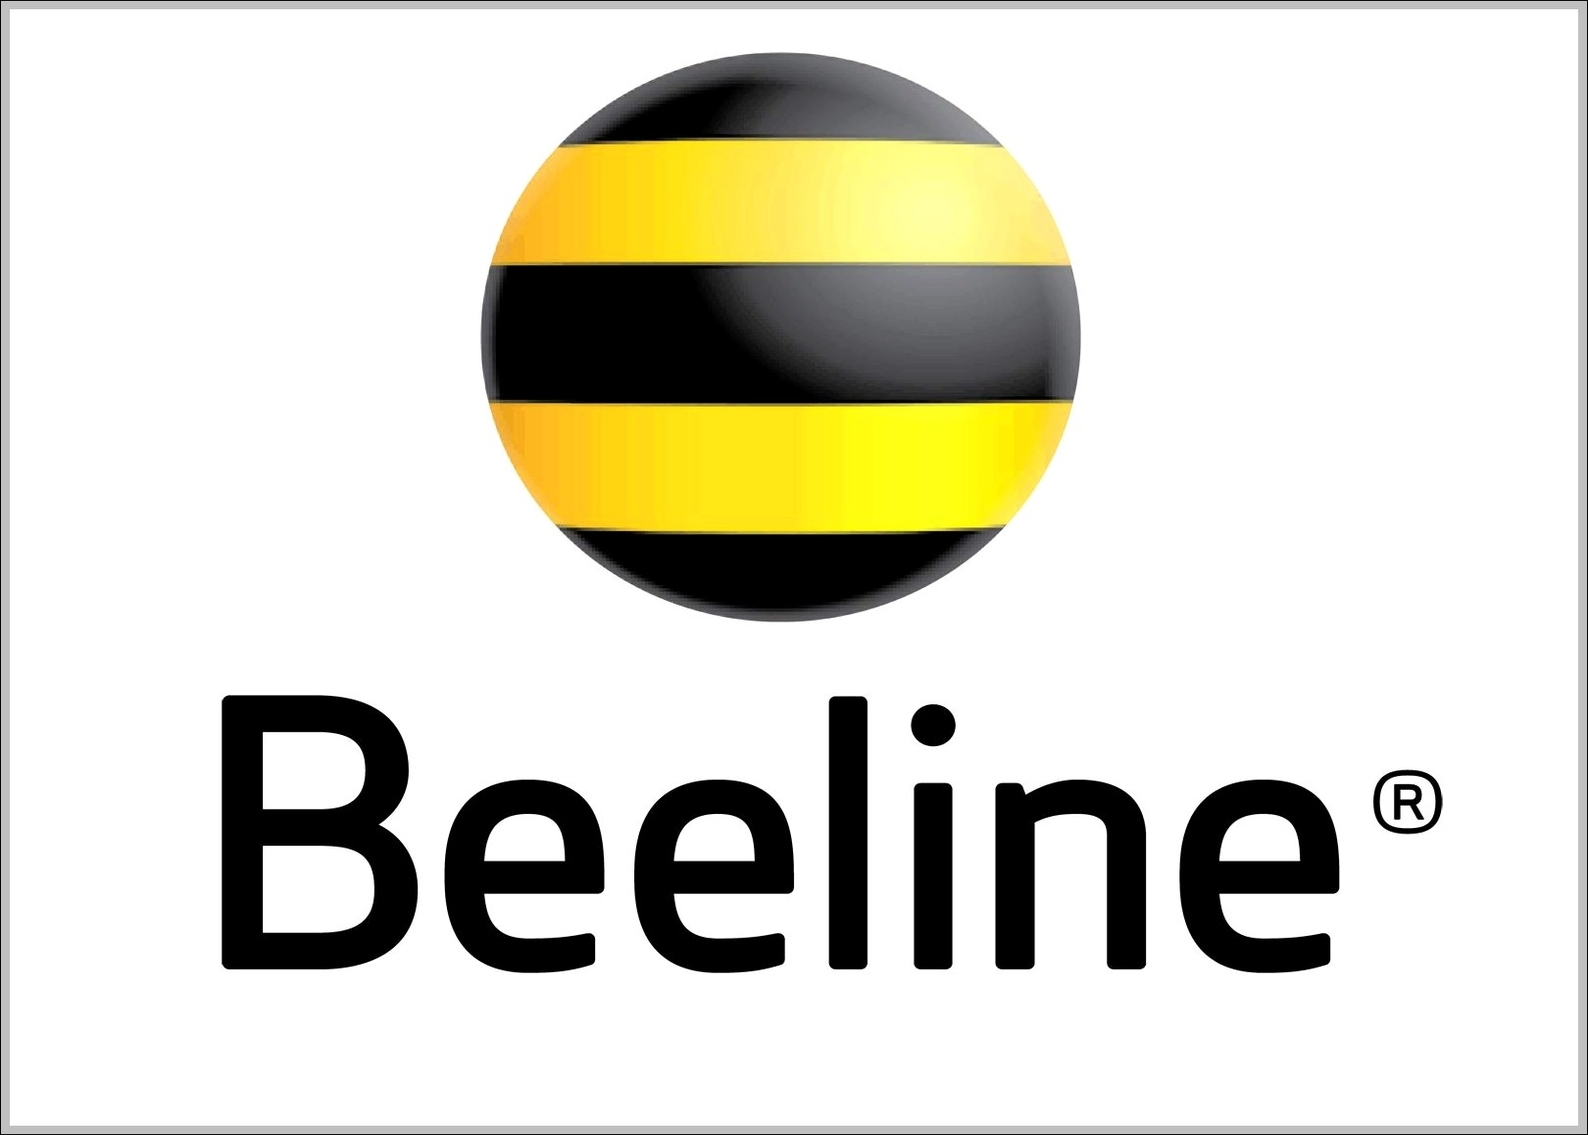 Beeline symbol